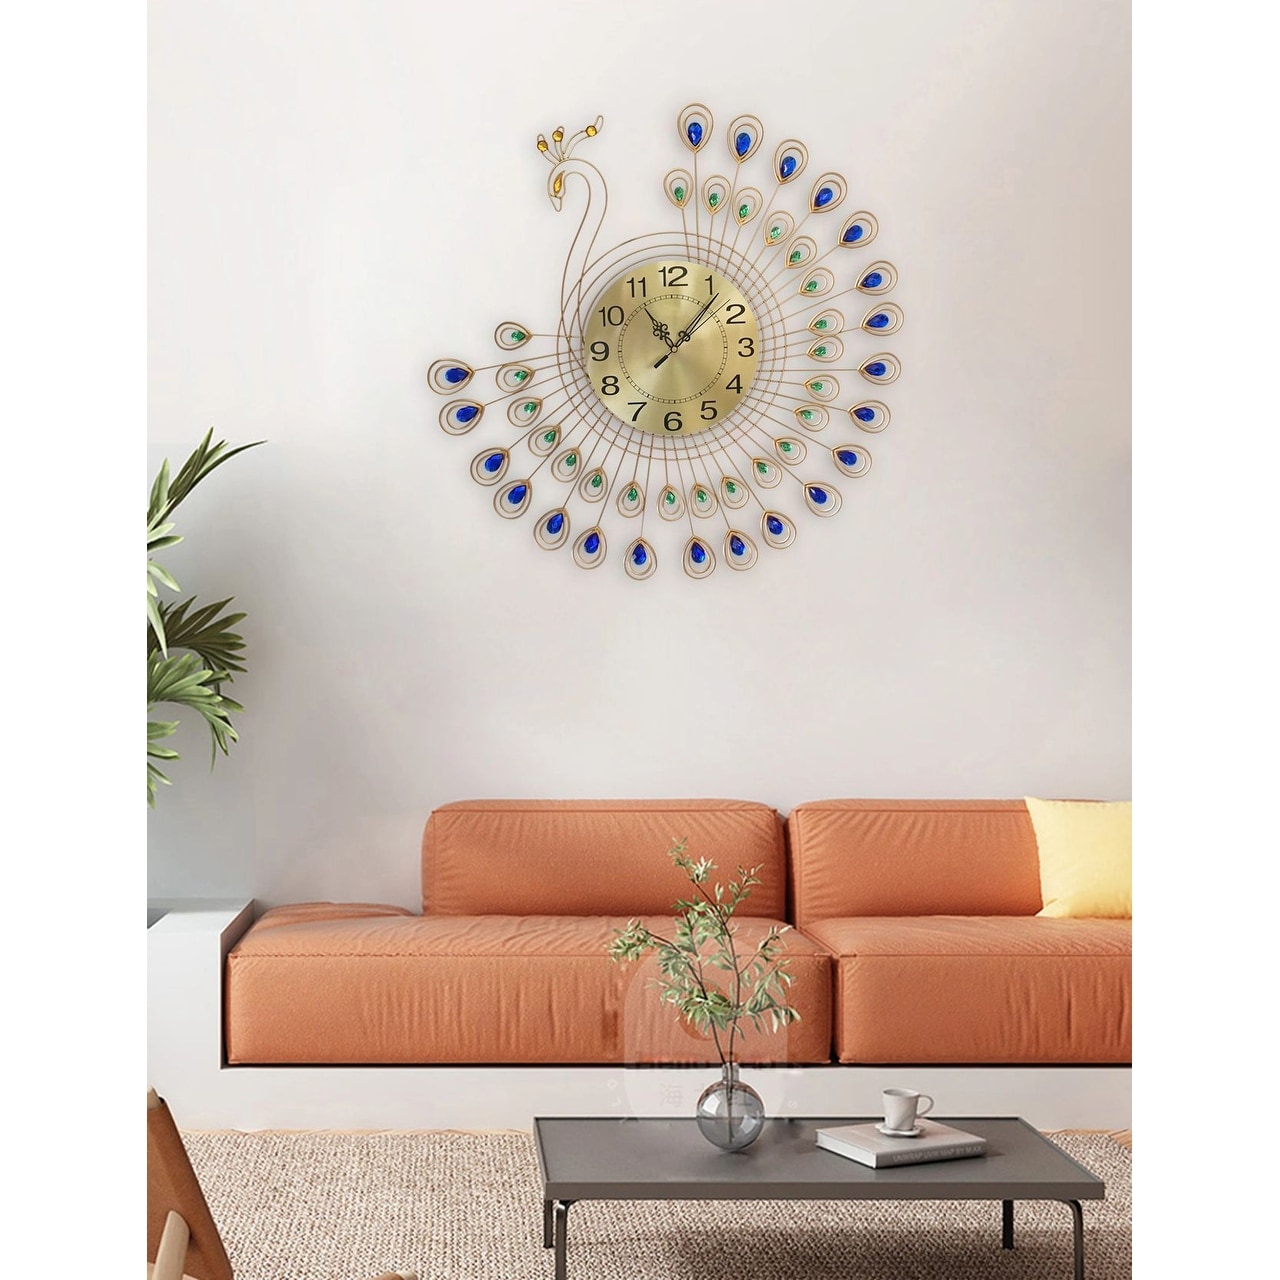 Decorative Metal Peacock feather theme Wall Clock (Multicolor)